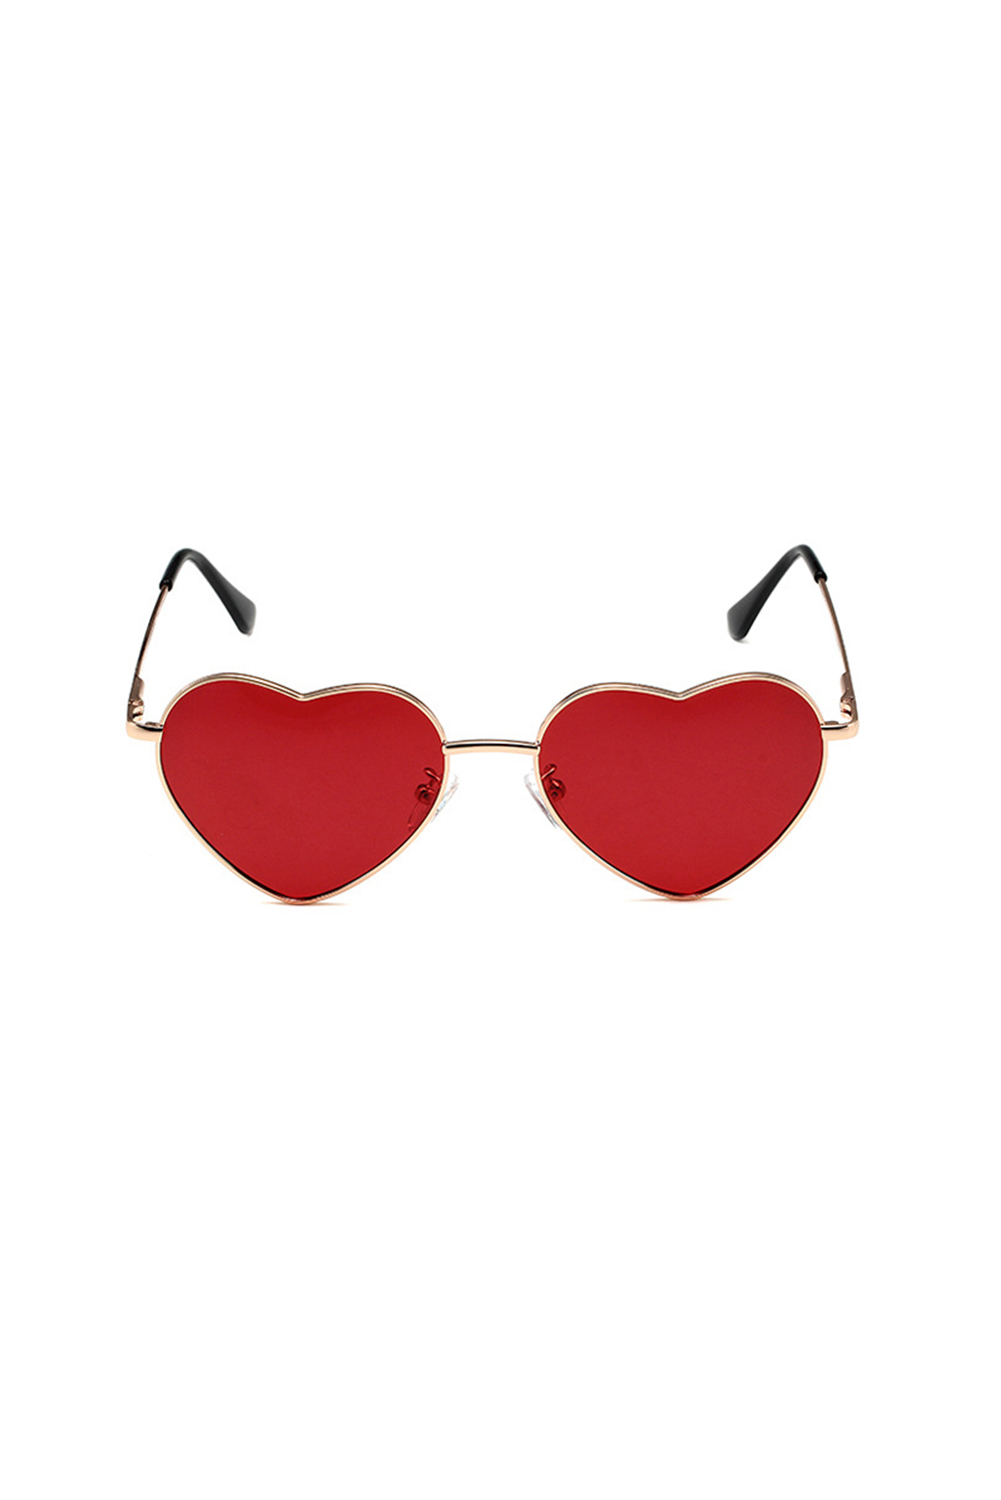 TV Hazbin Hotel Valentino Cosplay Vintage Heart Shaped Sunglasses Halloween Costume Accessories